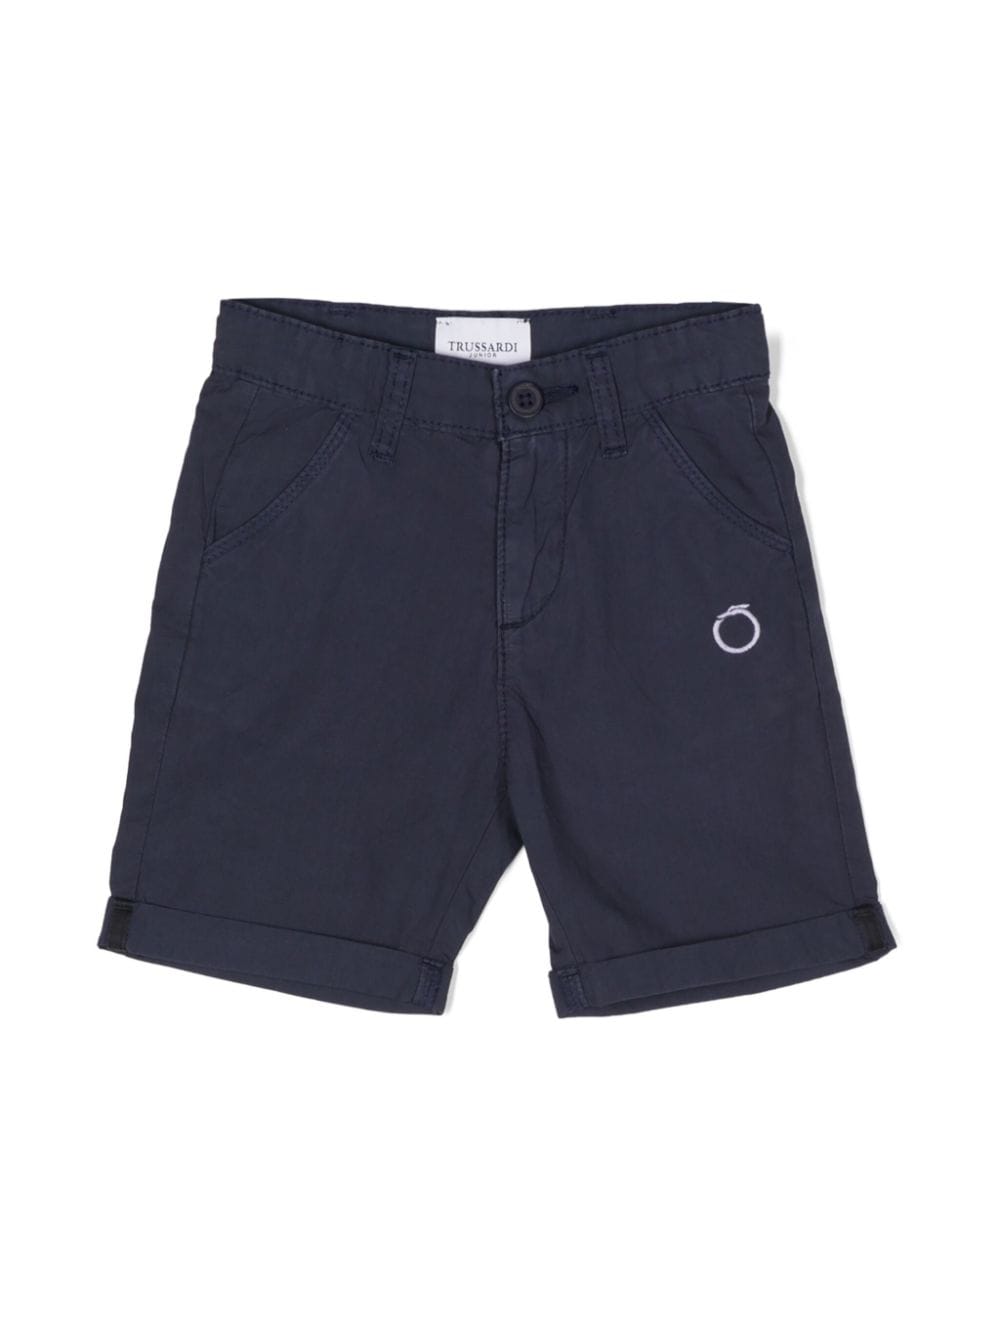 Navy blue Bermuda shorts for newborns with logo